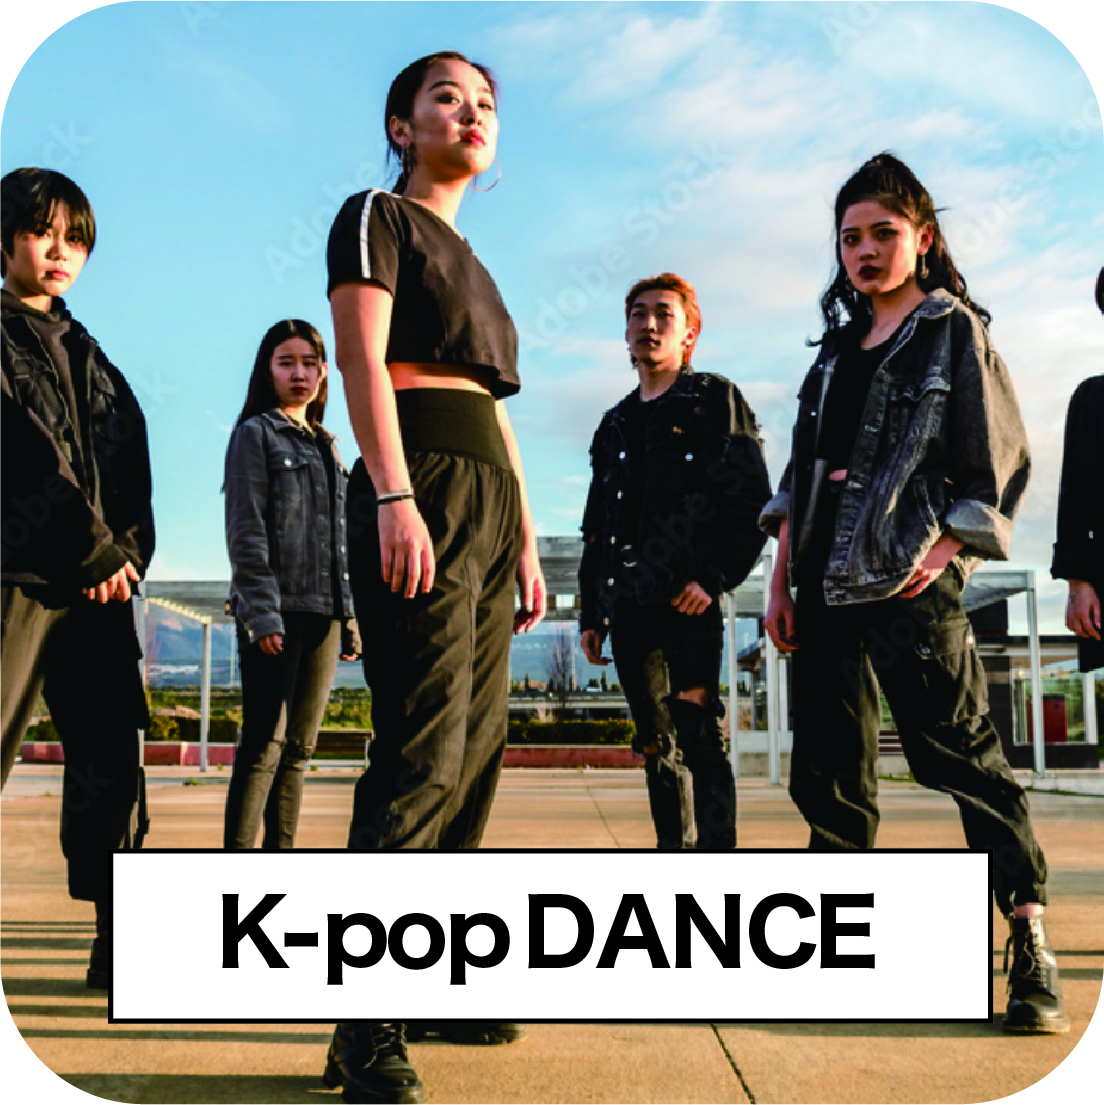 K-pop DANCE